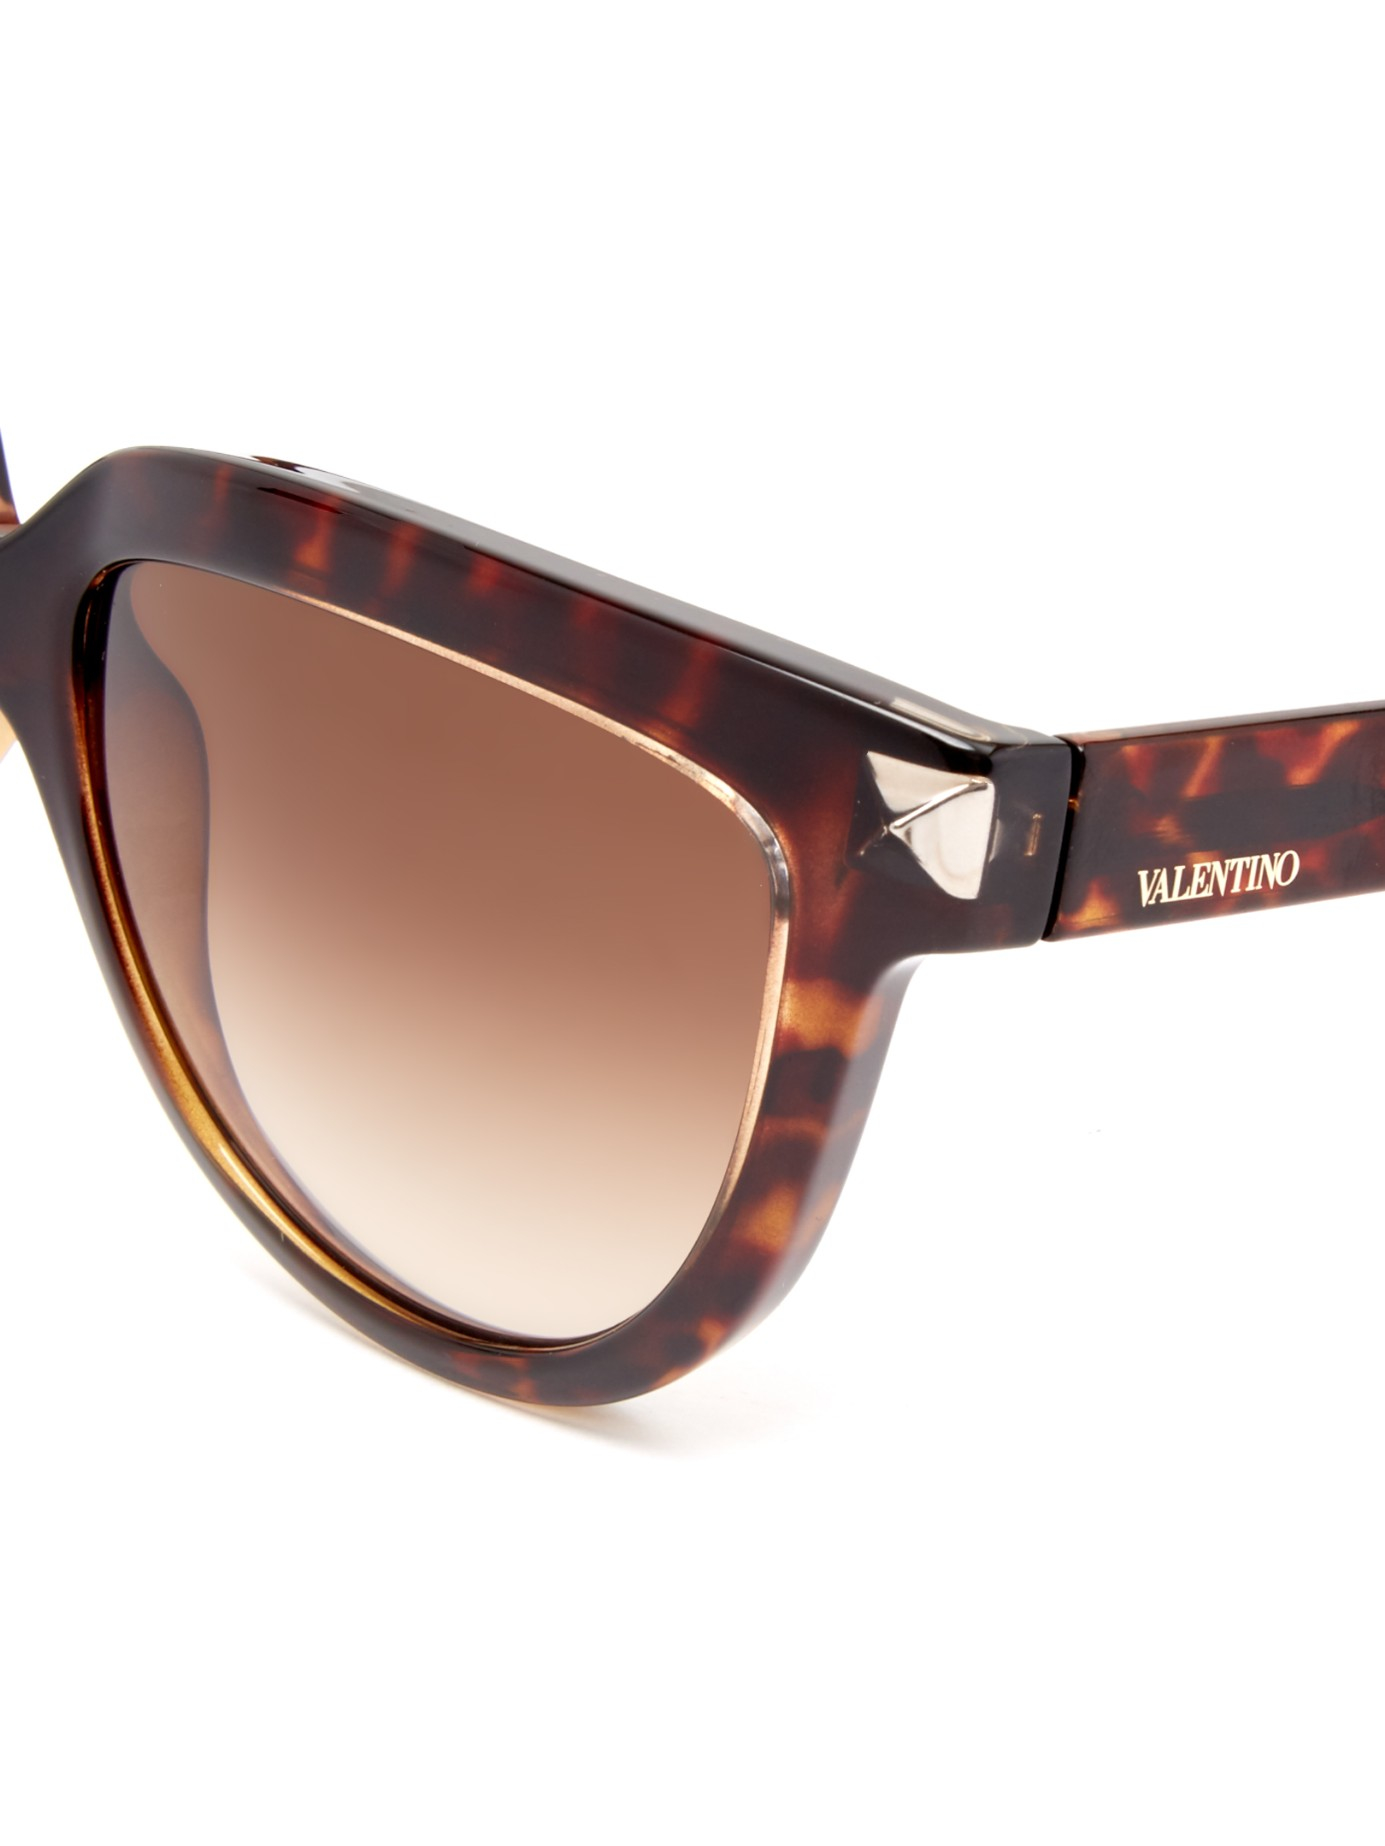 Lyst - Valentino Rockstud Cat-eye Frame Sunglasses in Brown